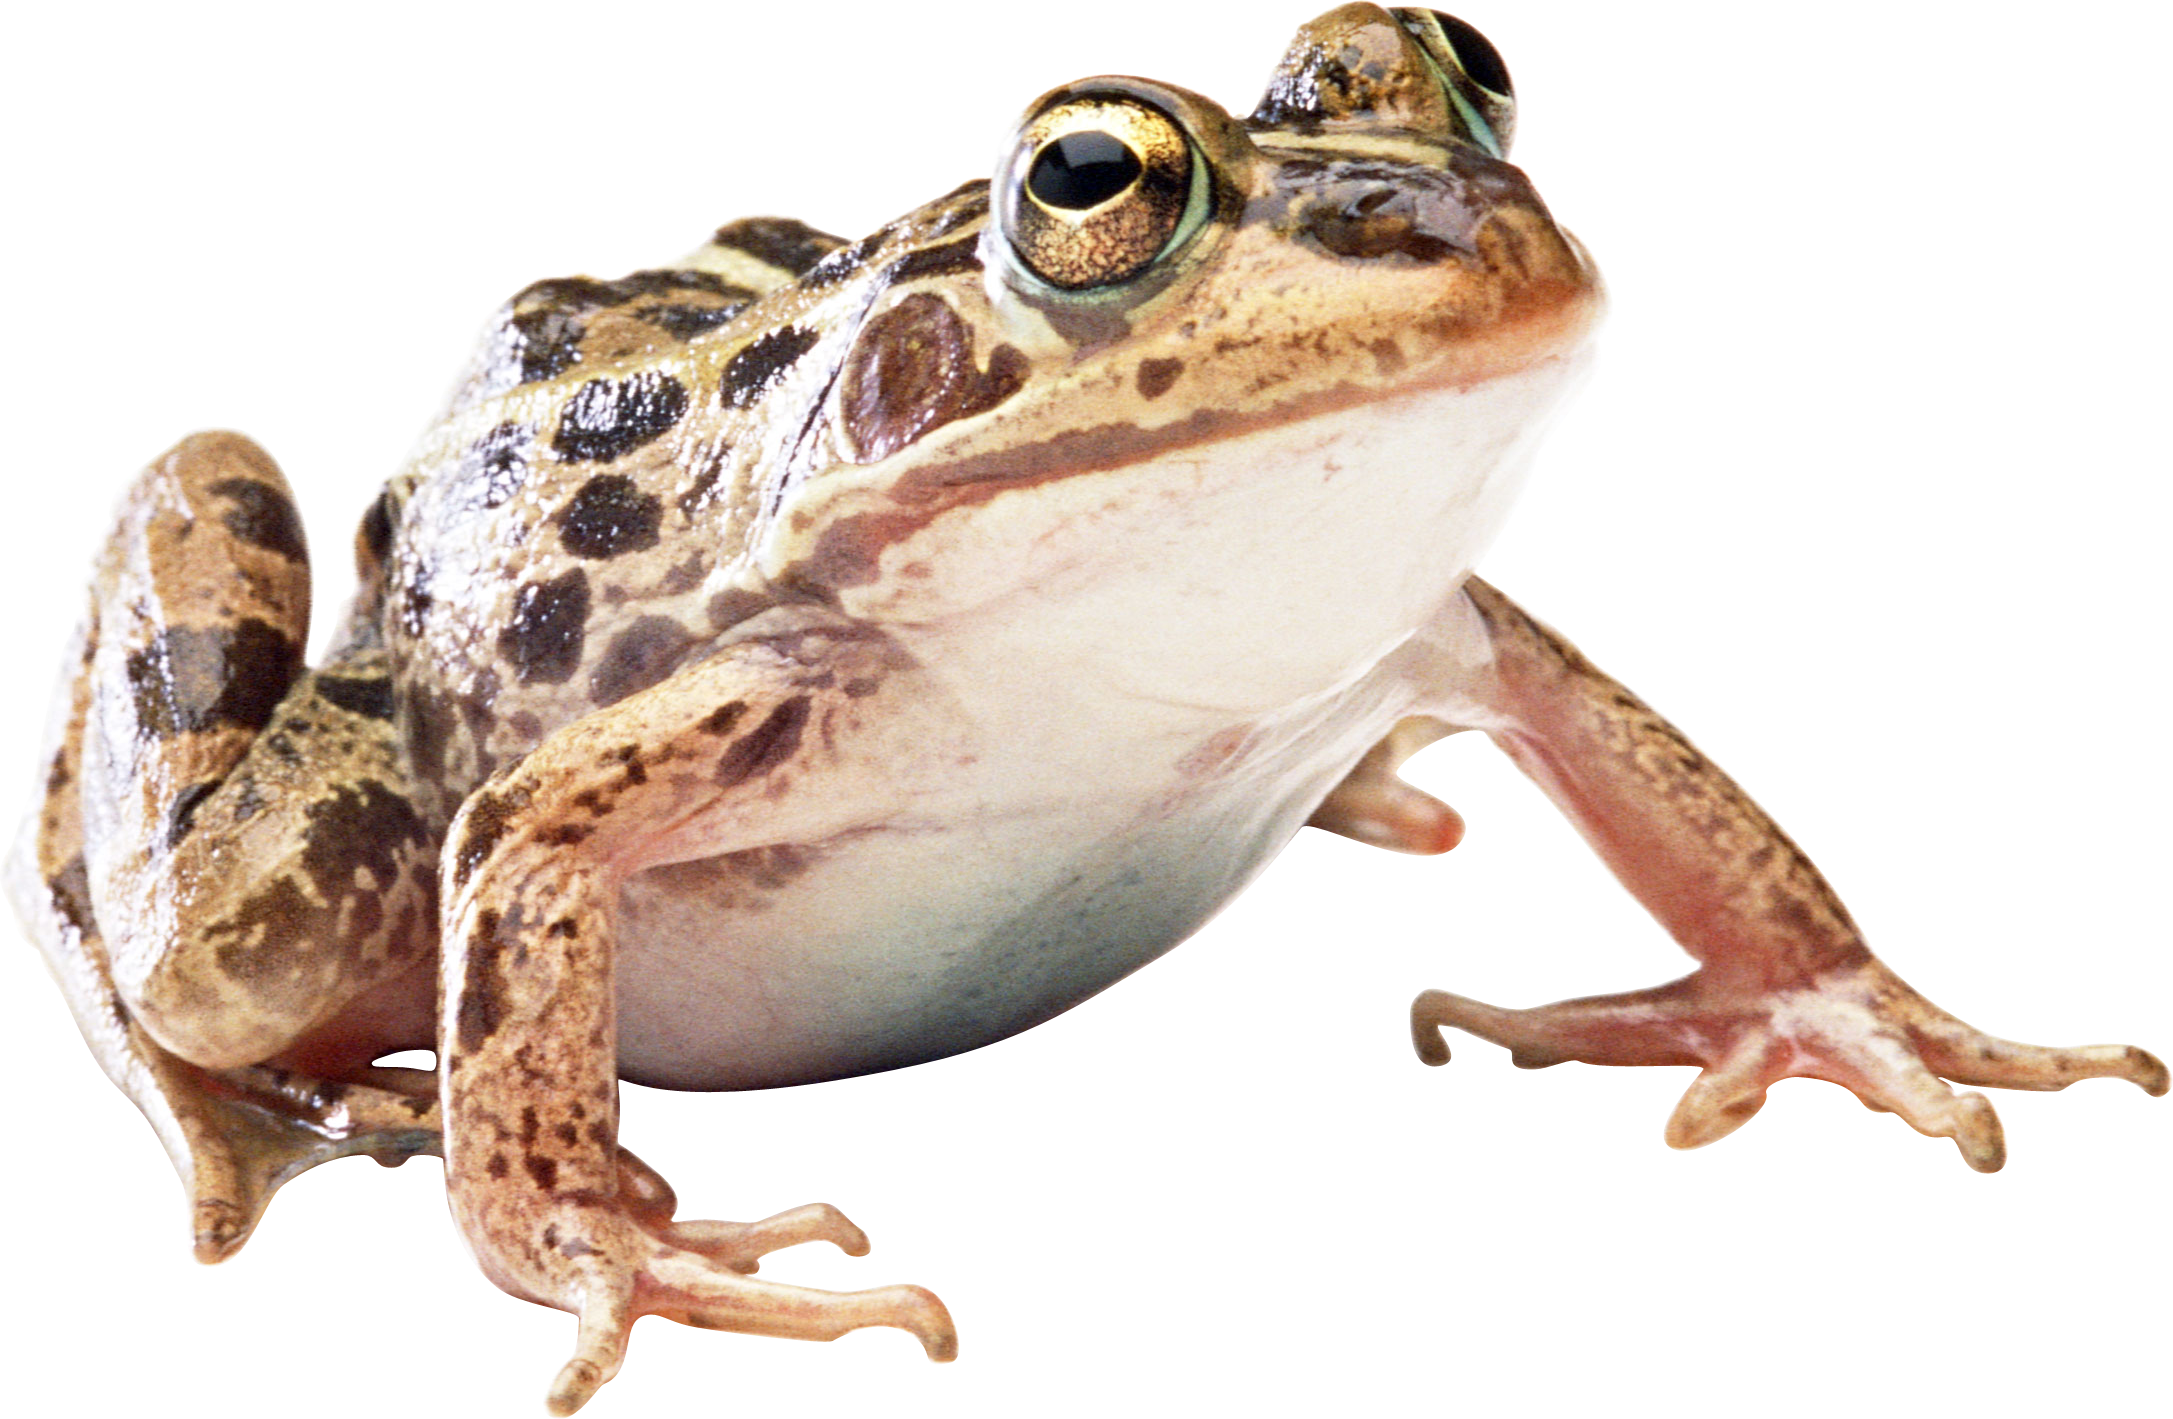 Frog PNG Image Free Download 